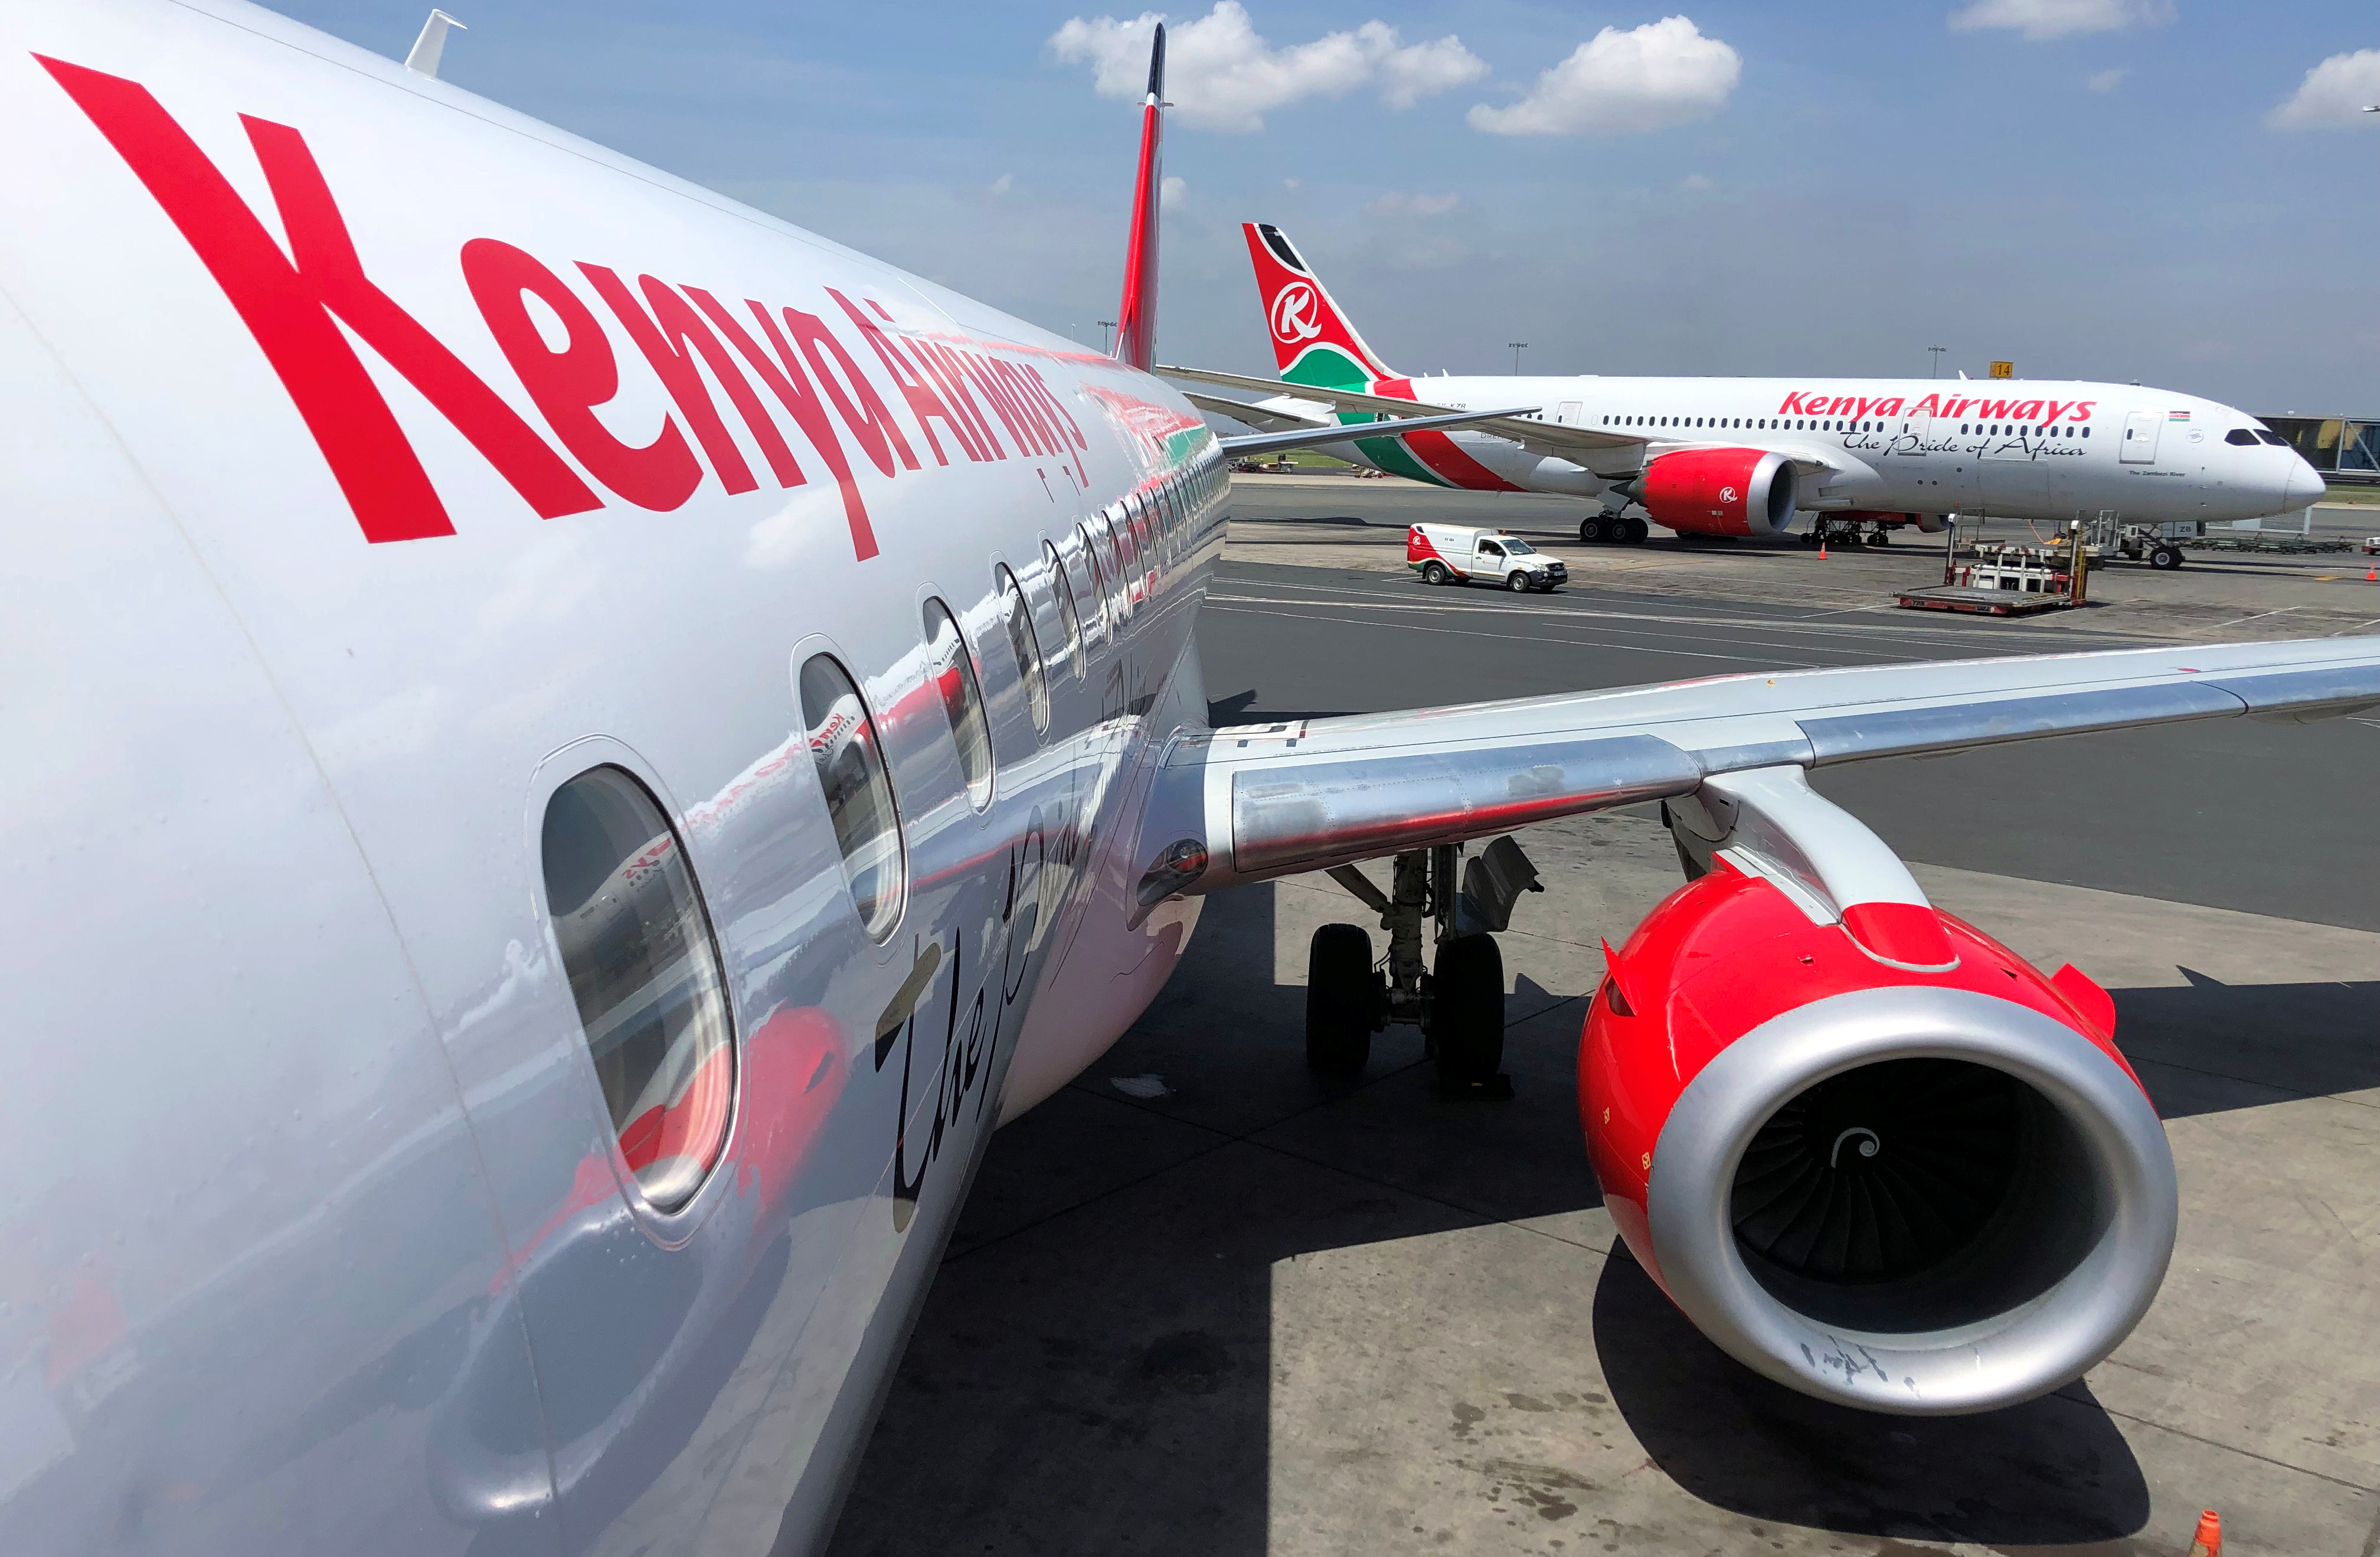 Kenya Airways planes are seen parked at the Jomo Kenyatta International Airport near Nairobi